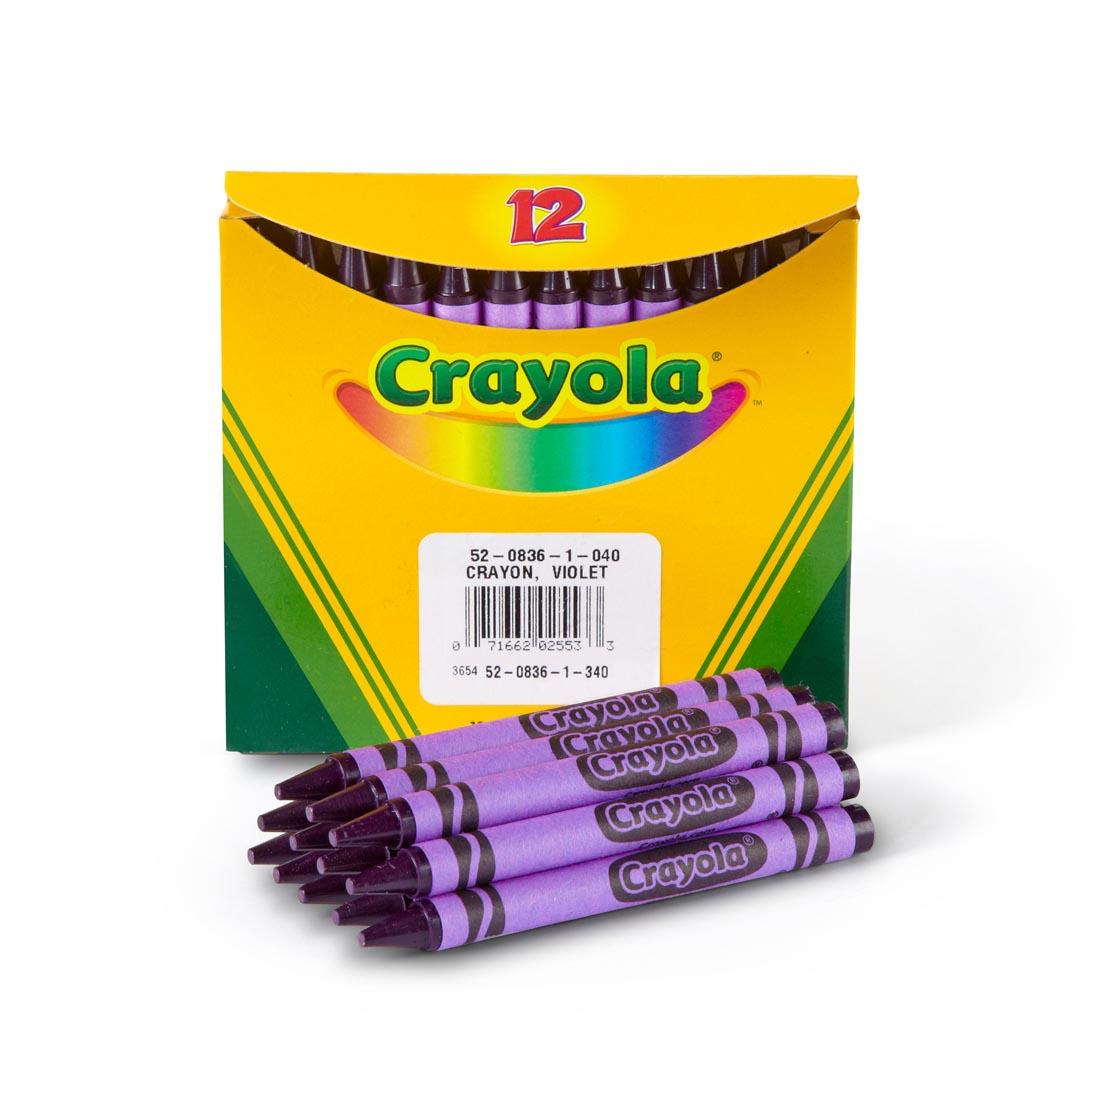 Box of Crayola Regular Crayon Refills with 12 Violet Crayons